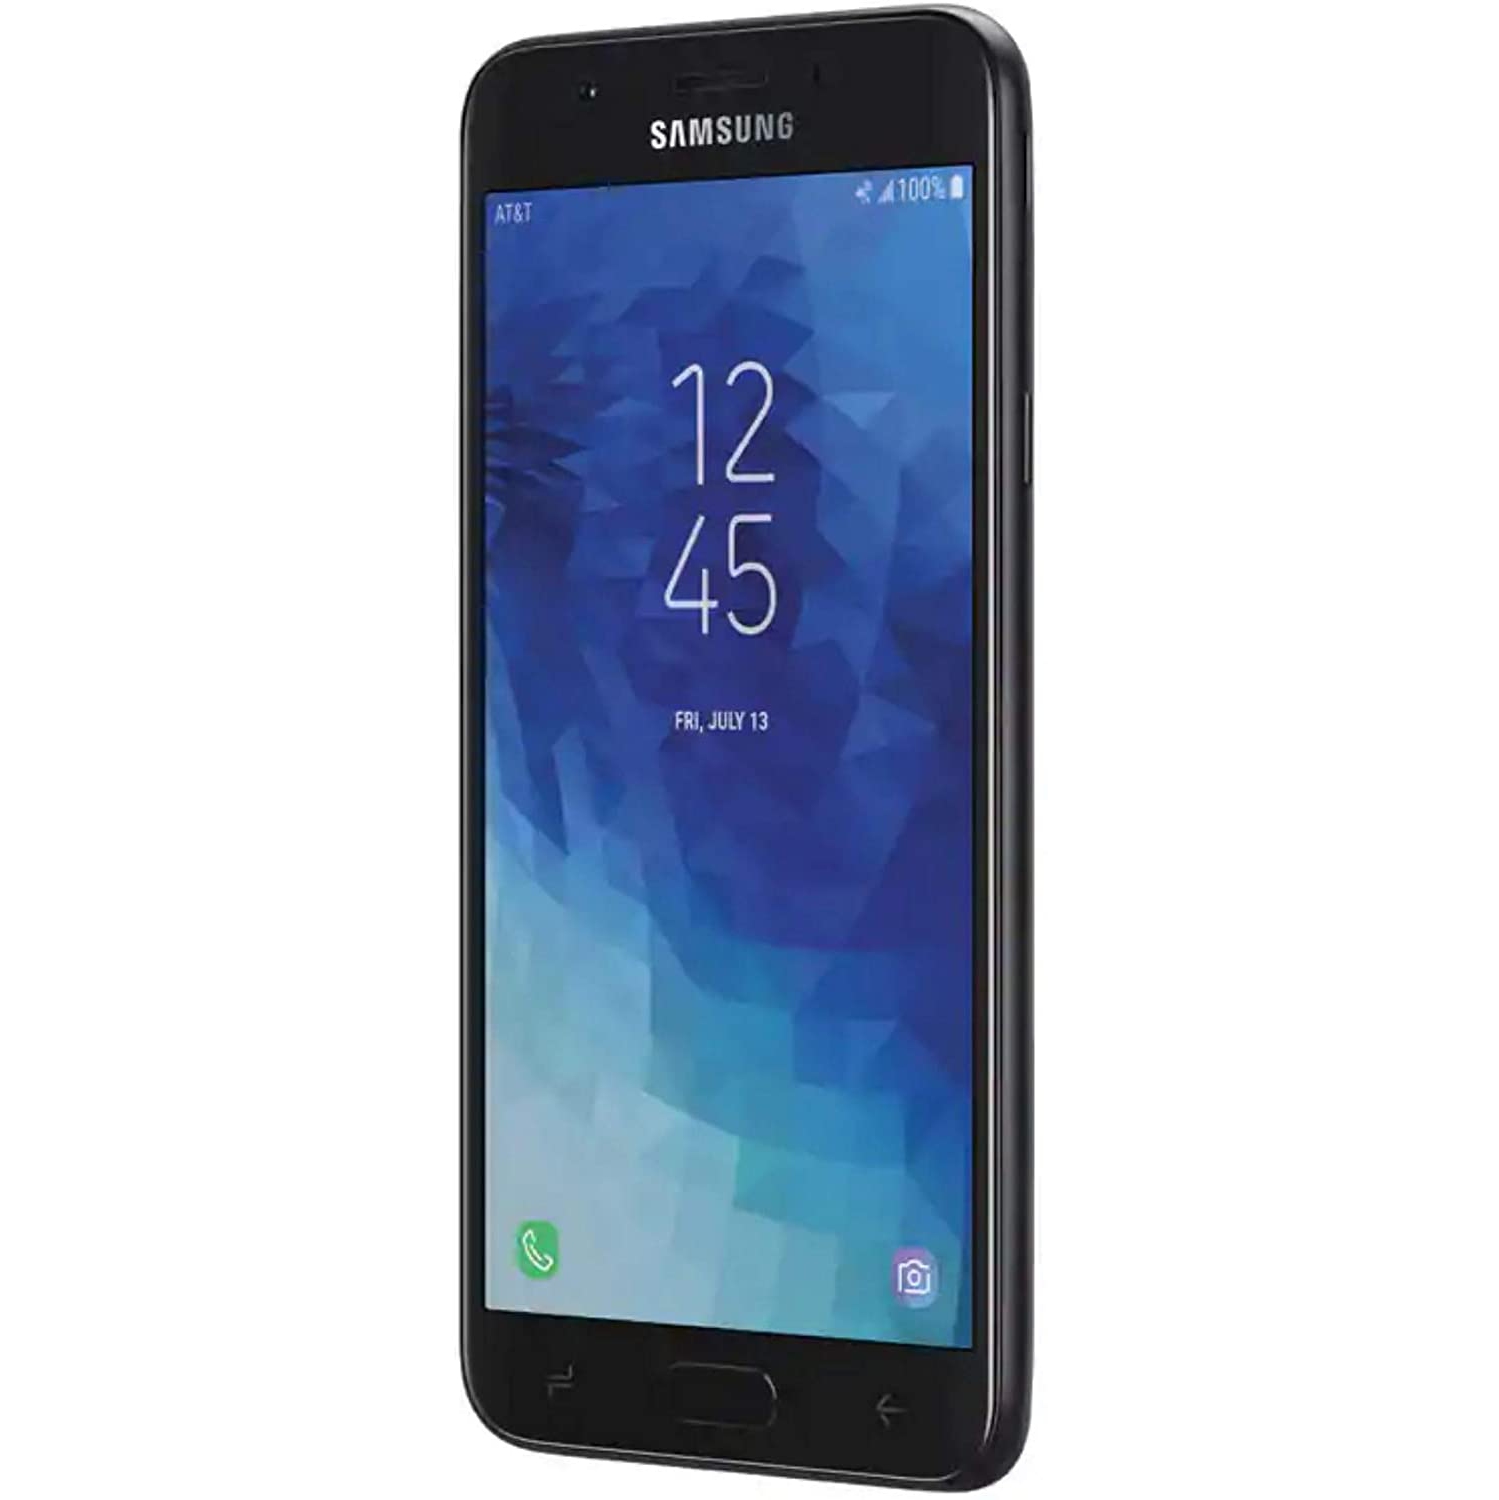 Samsung Galaxy J7 2018 (16GB) J737A - 5.5 HD Display, Android 8.0, Octa-core 4G LTE at & T Smartphone Unlocked (Black) *BRAND NEW